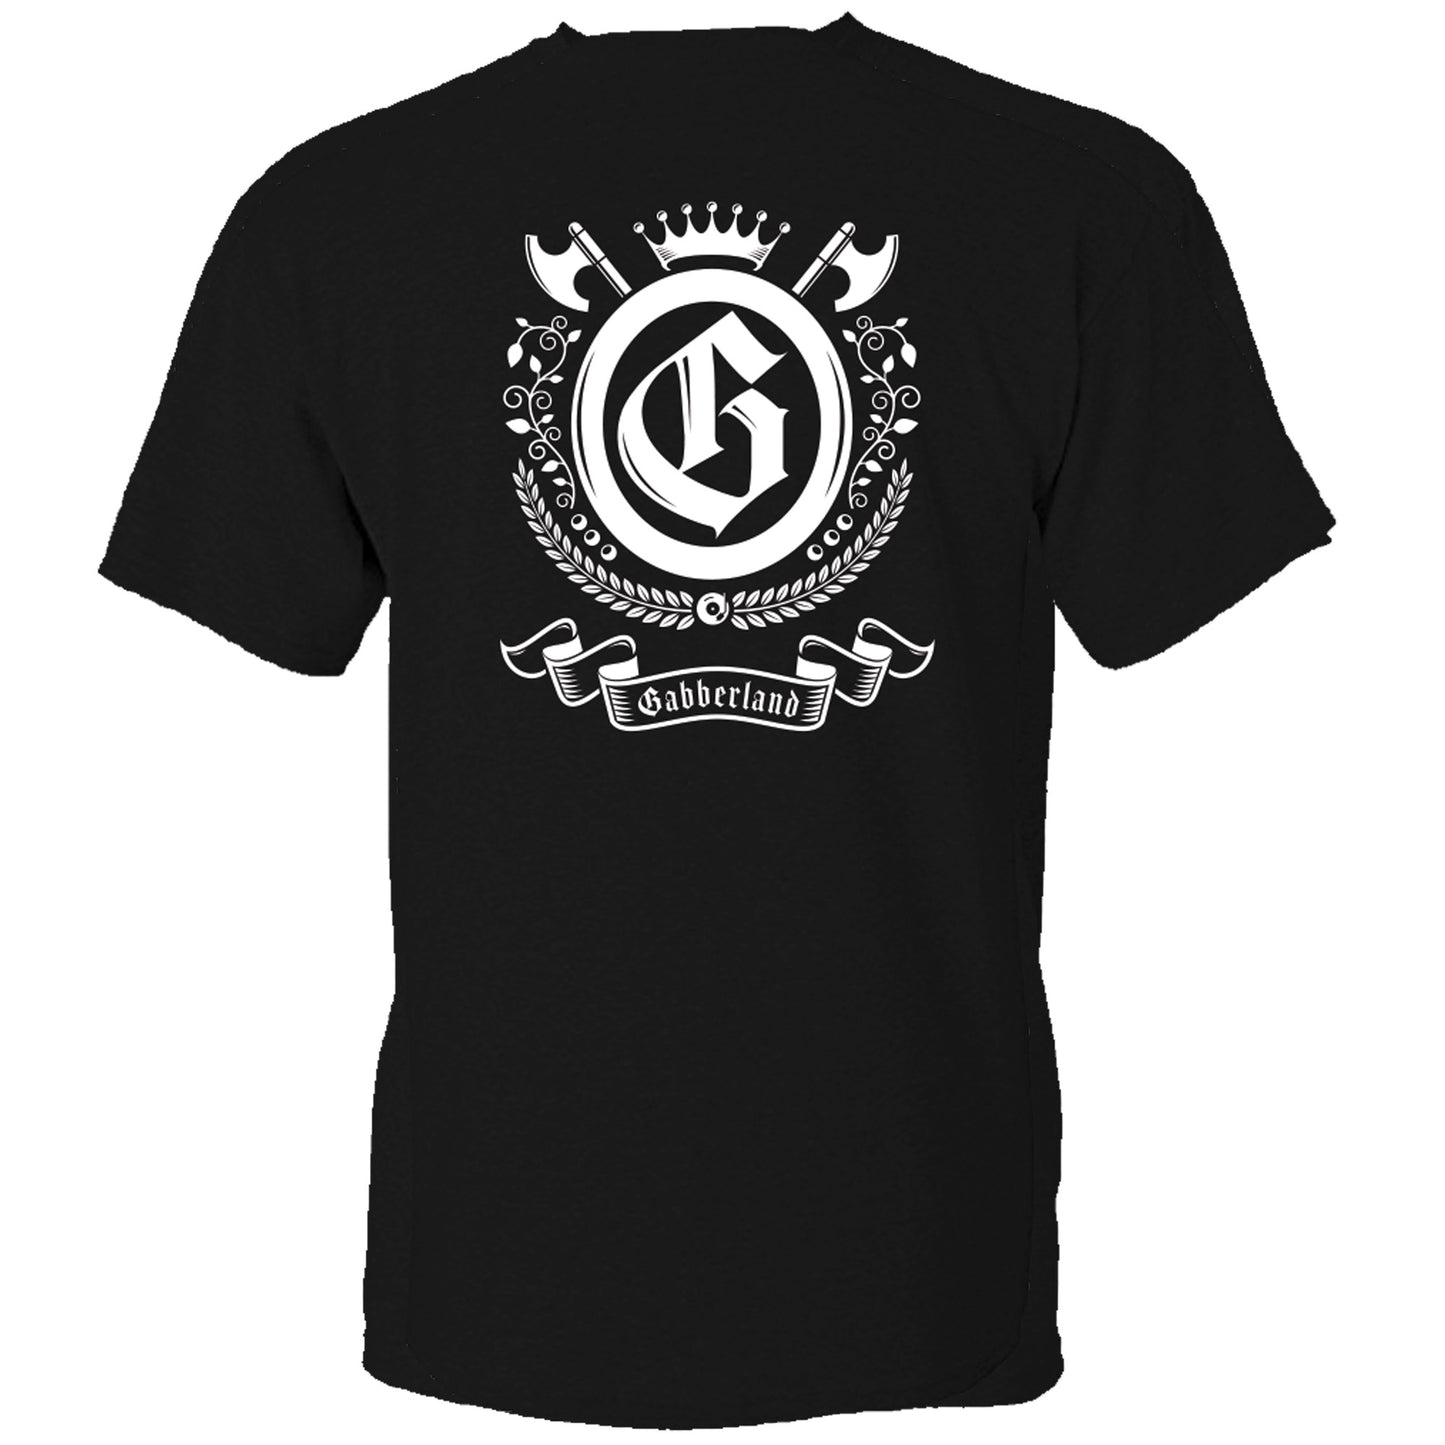 Gabberland T-shirt Black - white